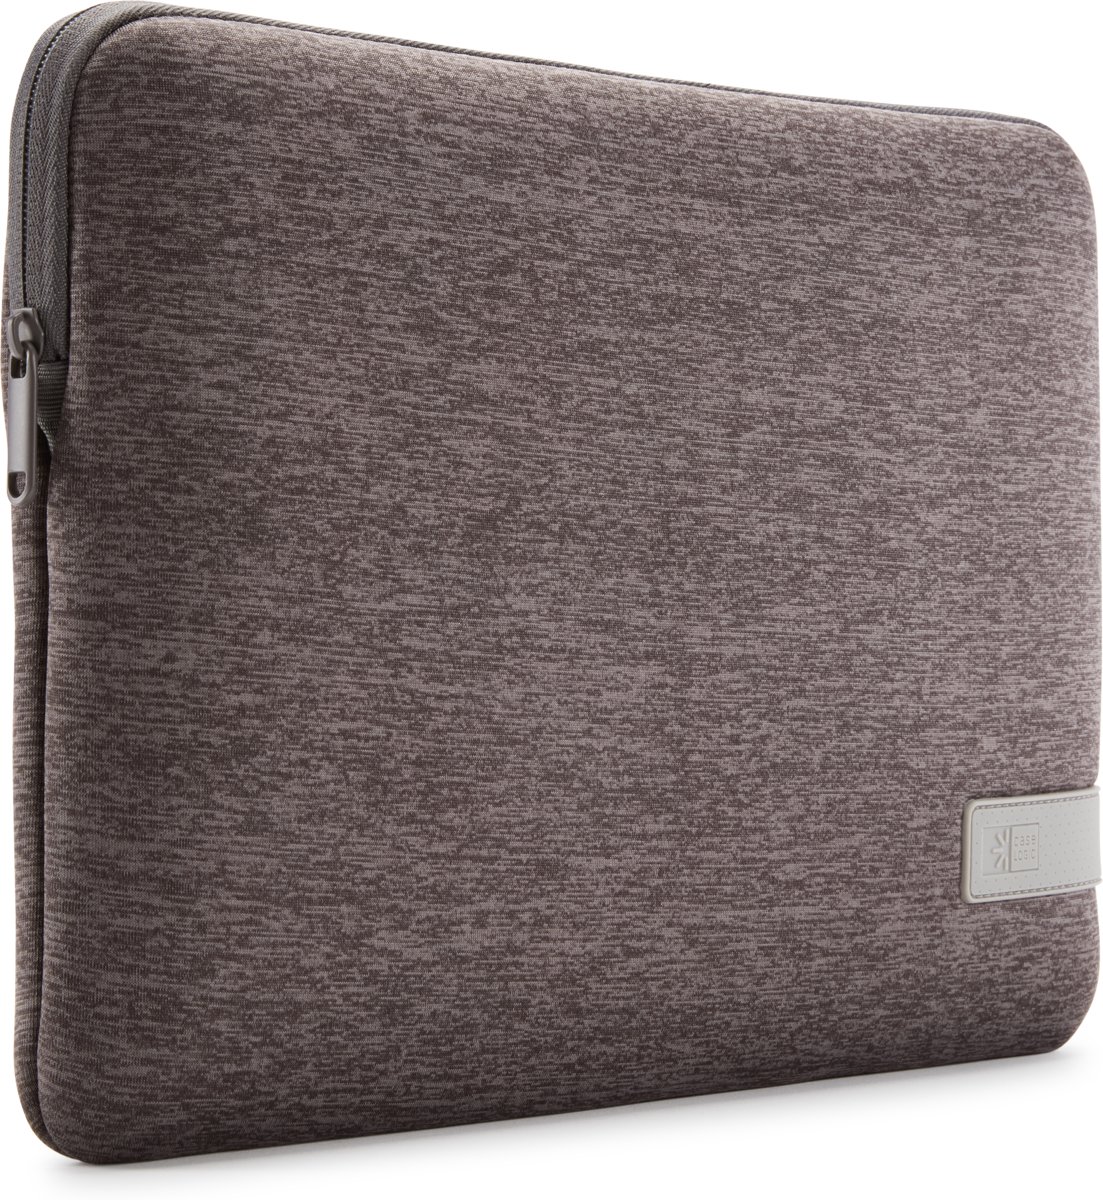 Case Logic Reflect 13 inch - Laptopsleeve Macbook Pro 13 - Grijs